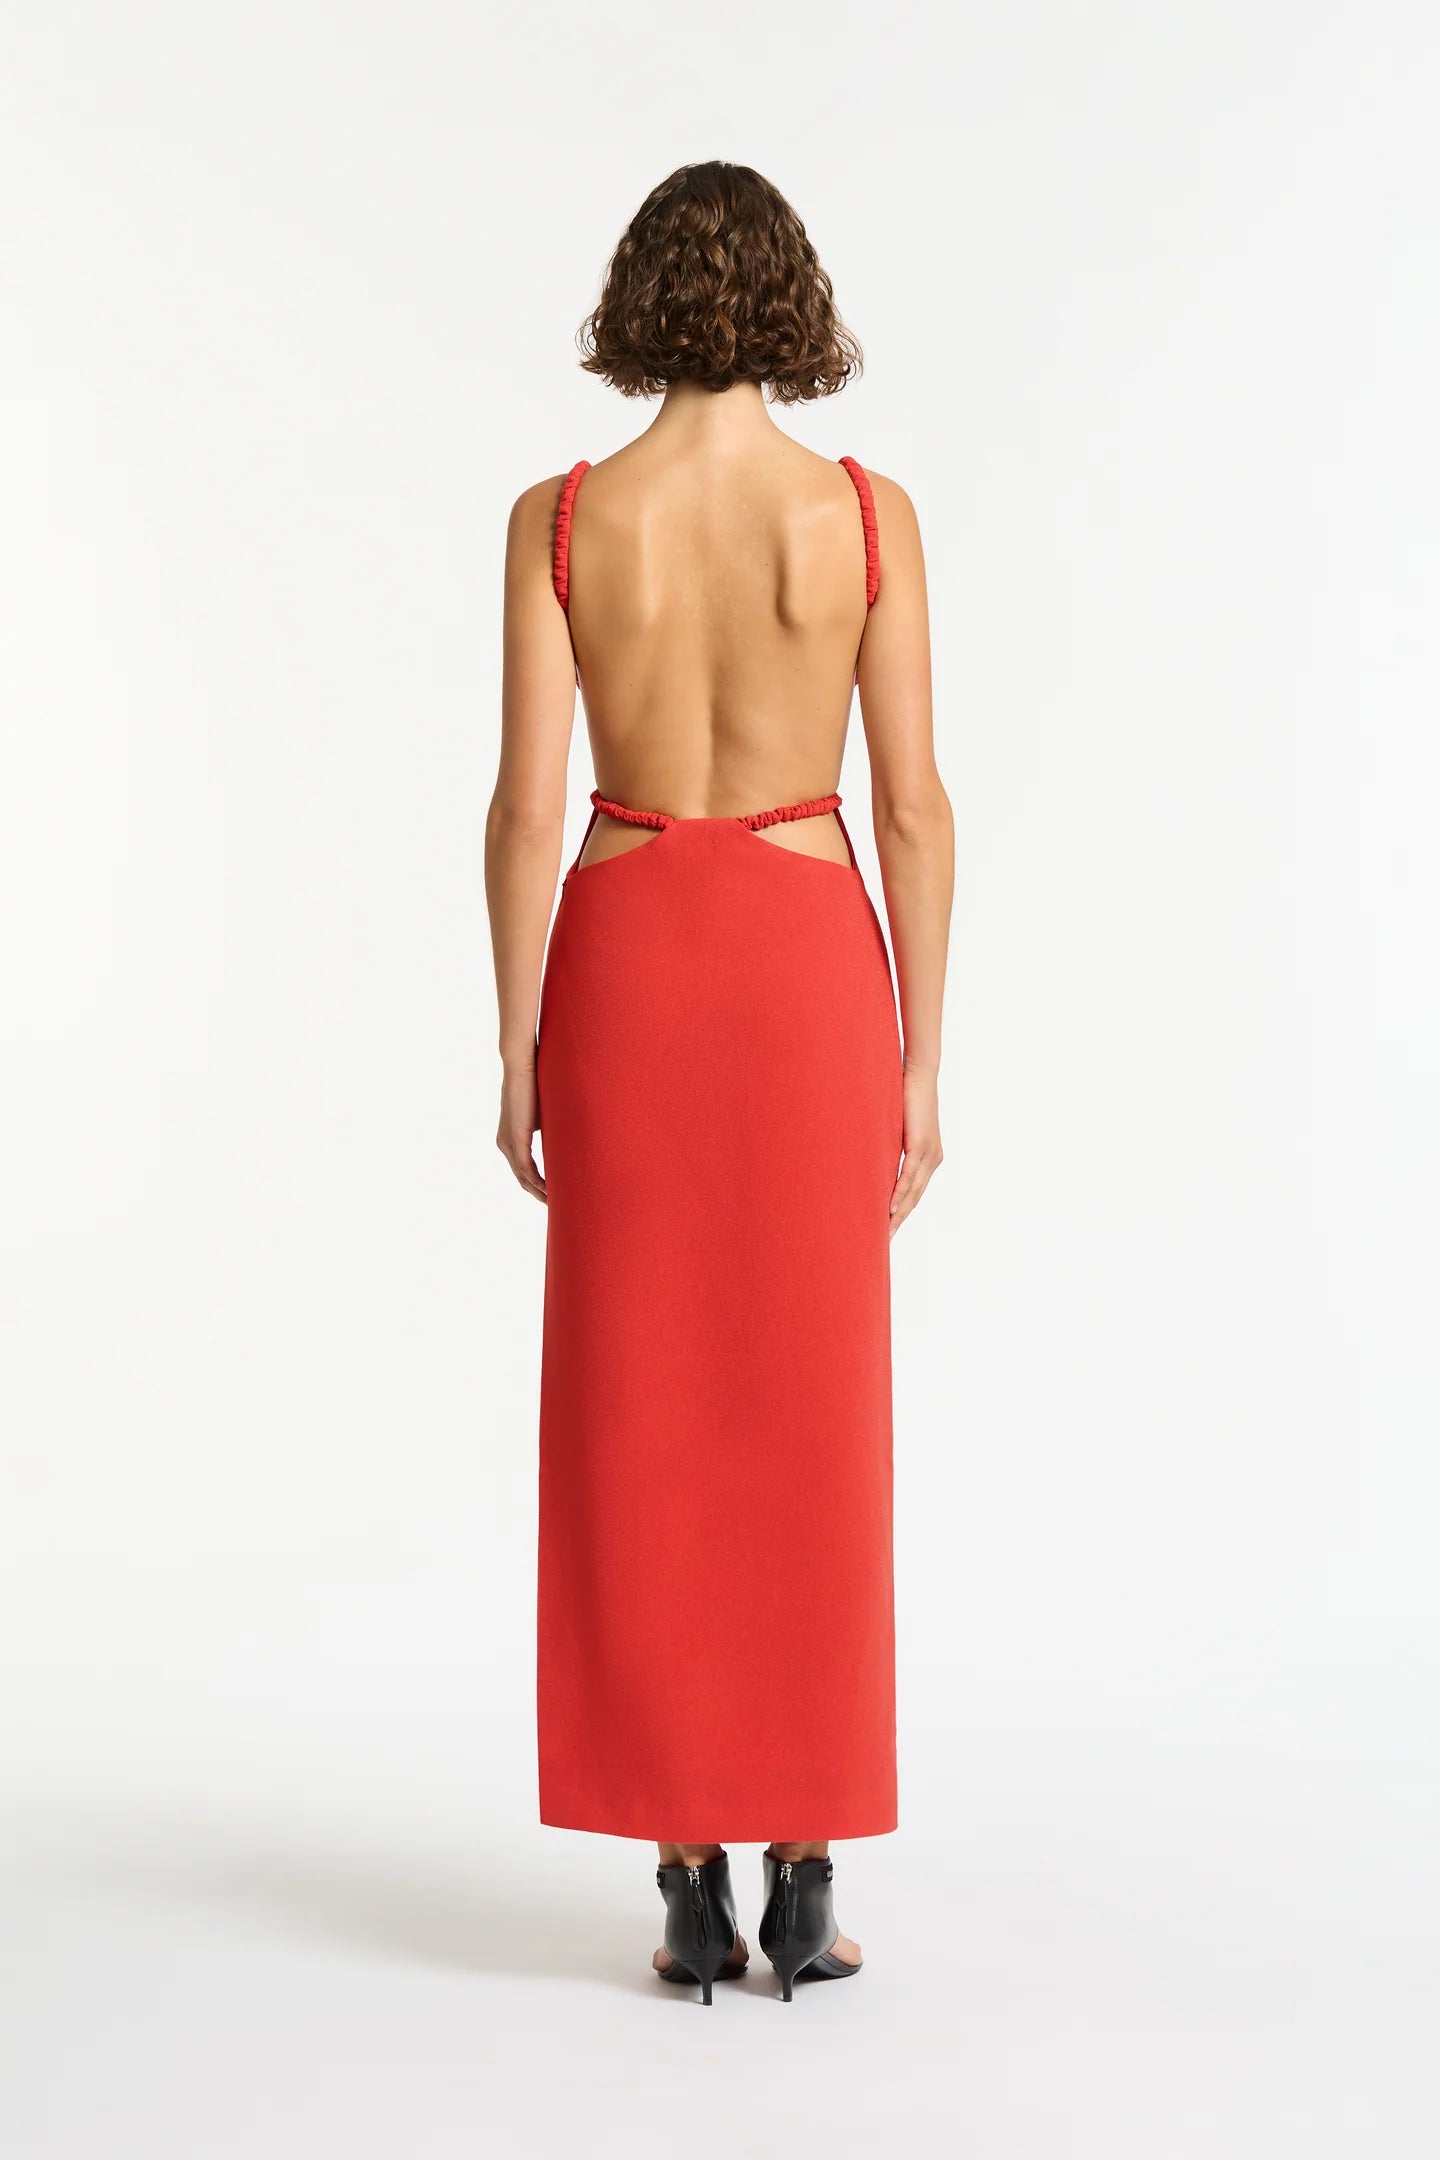 Spoerri Backless Gown Red